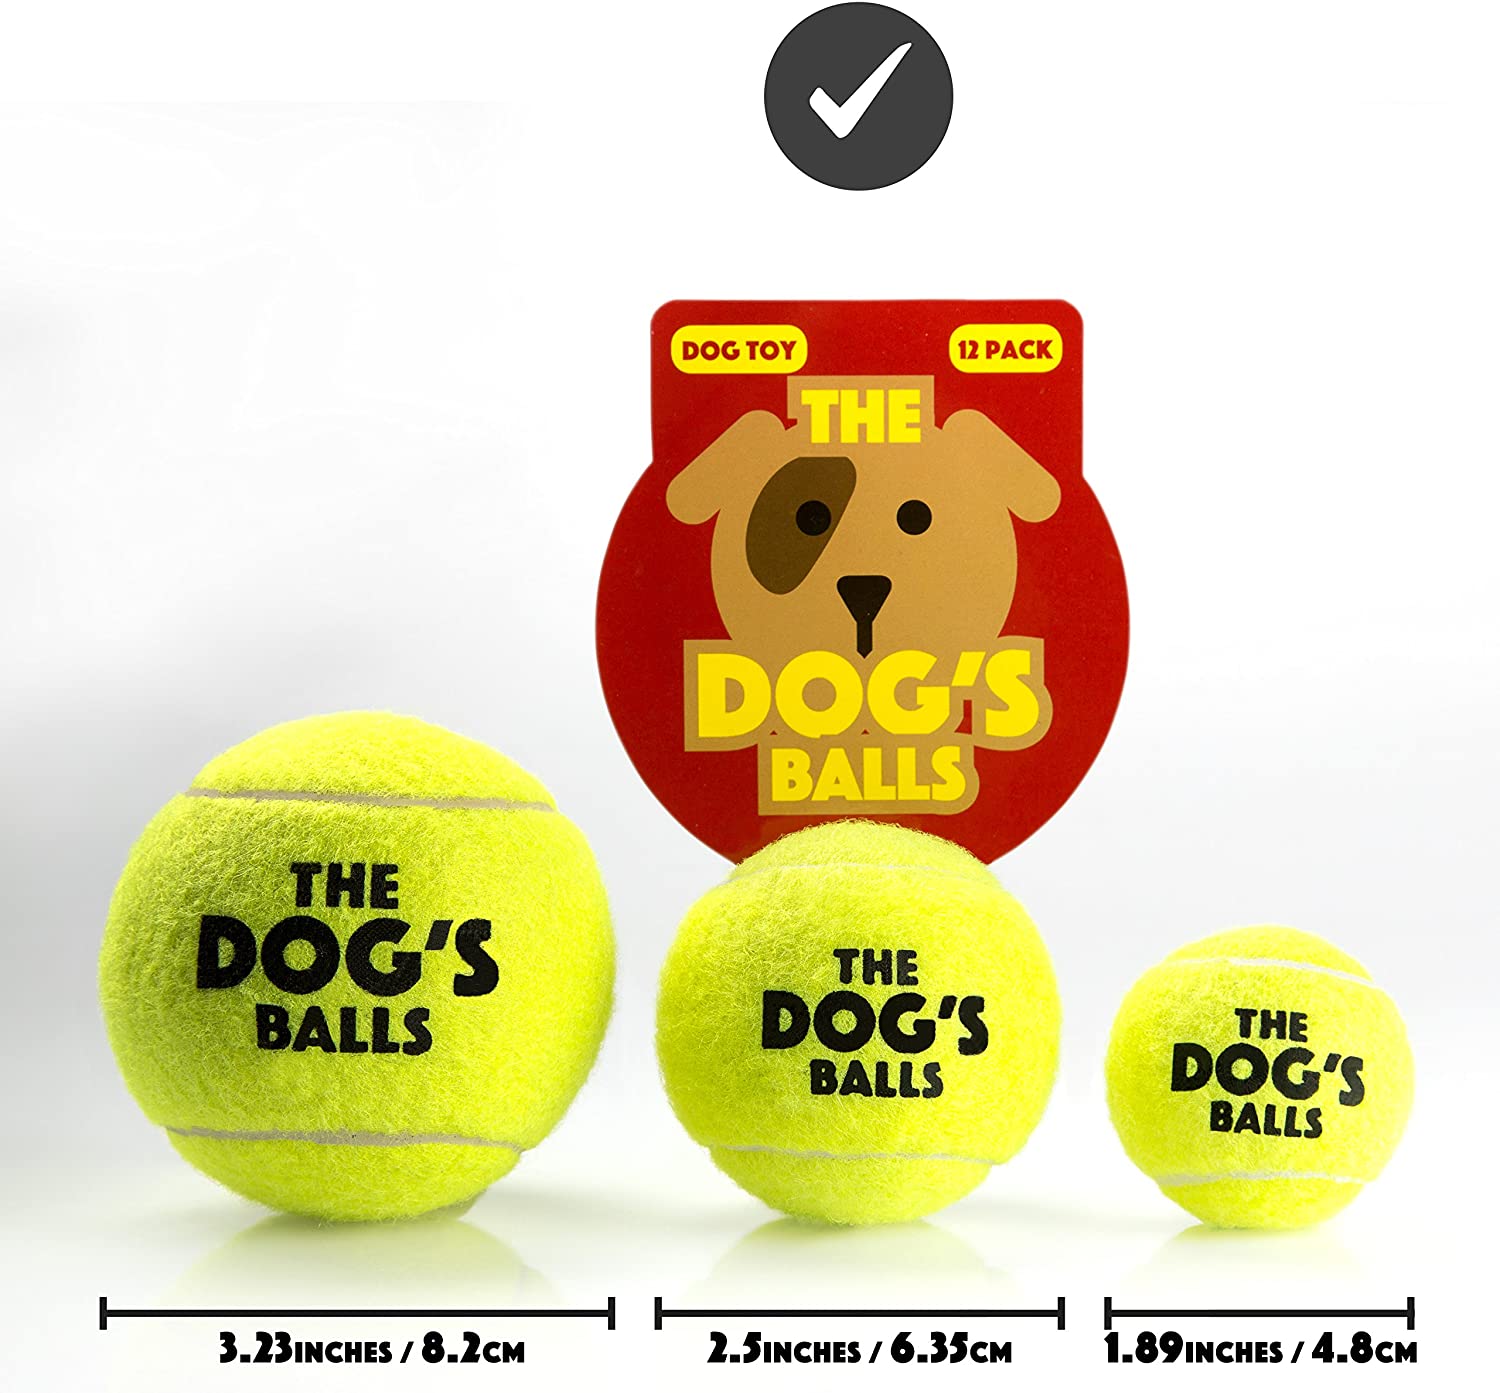  Pelotas de tenis para perros The Dog’s Balls 